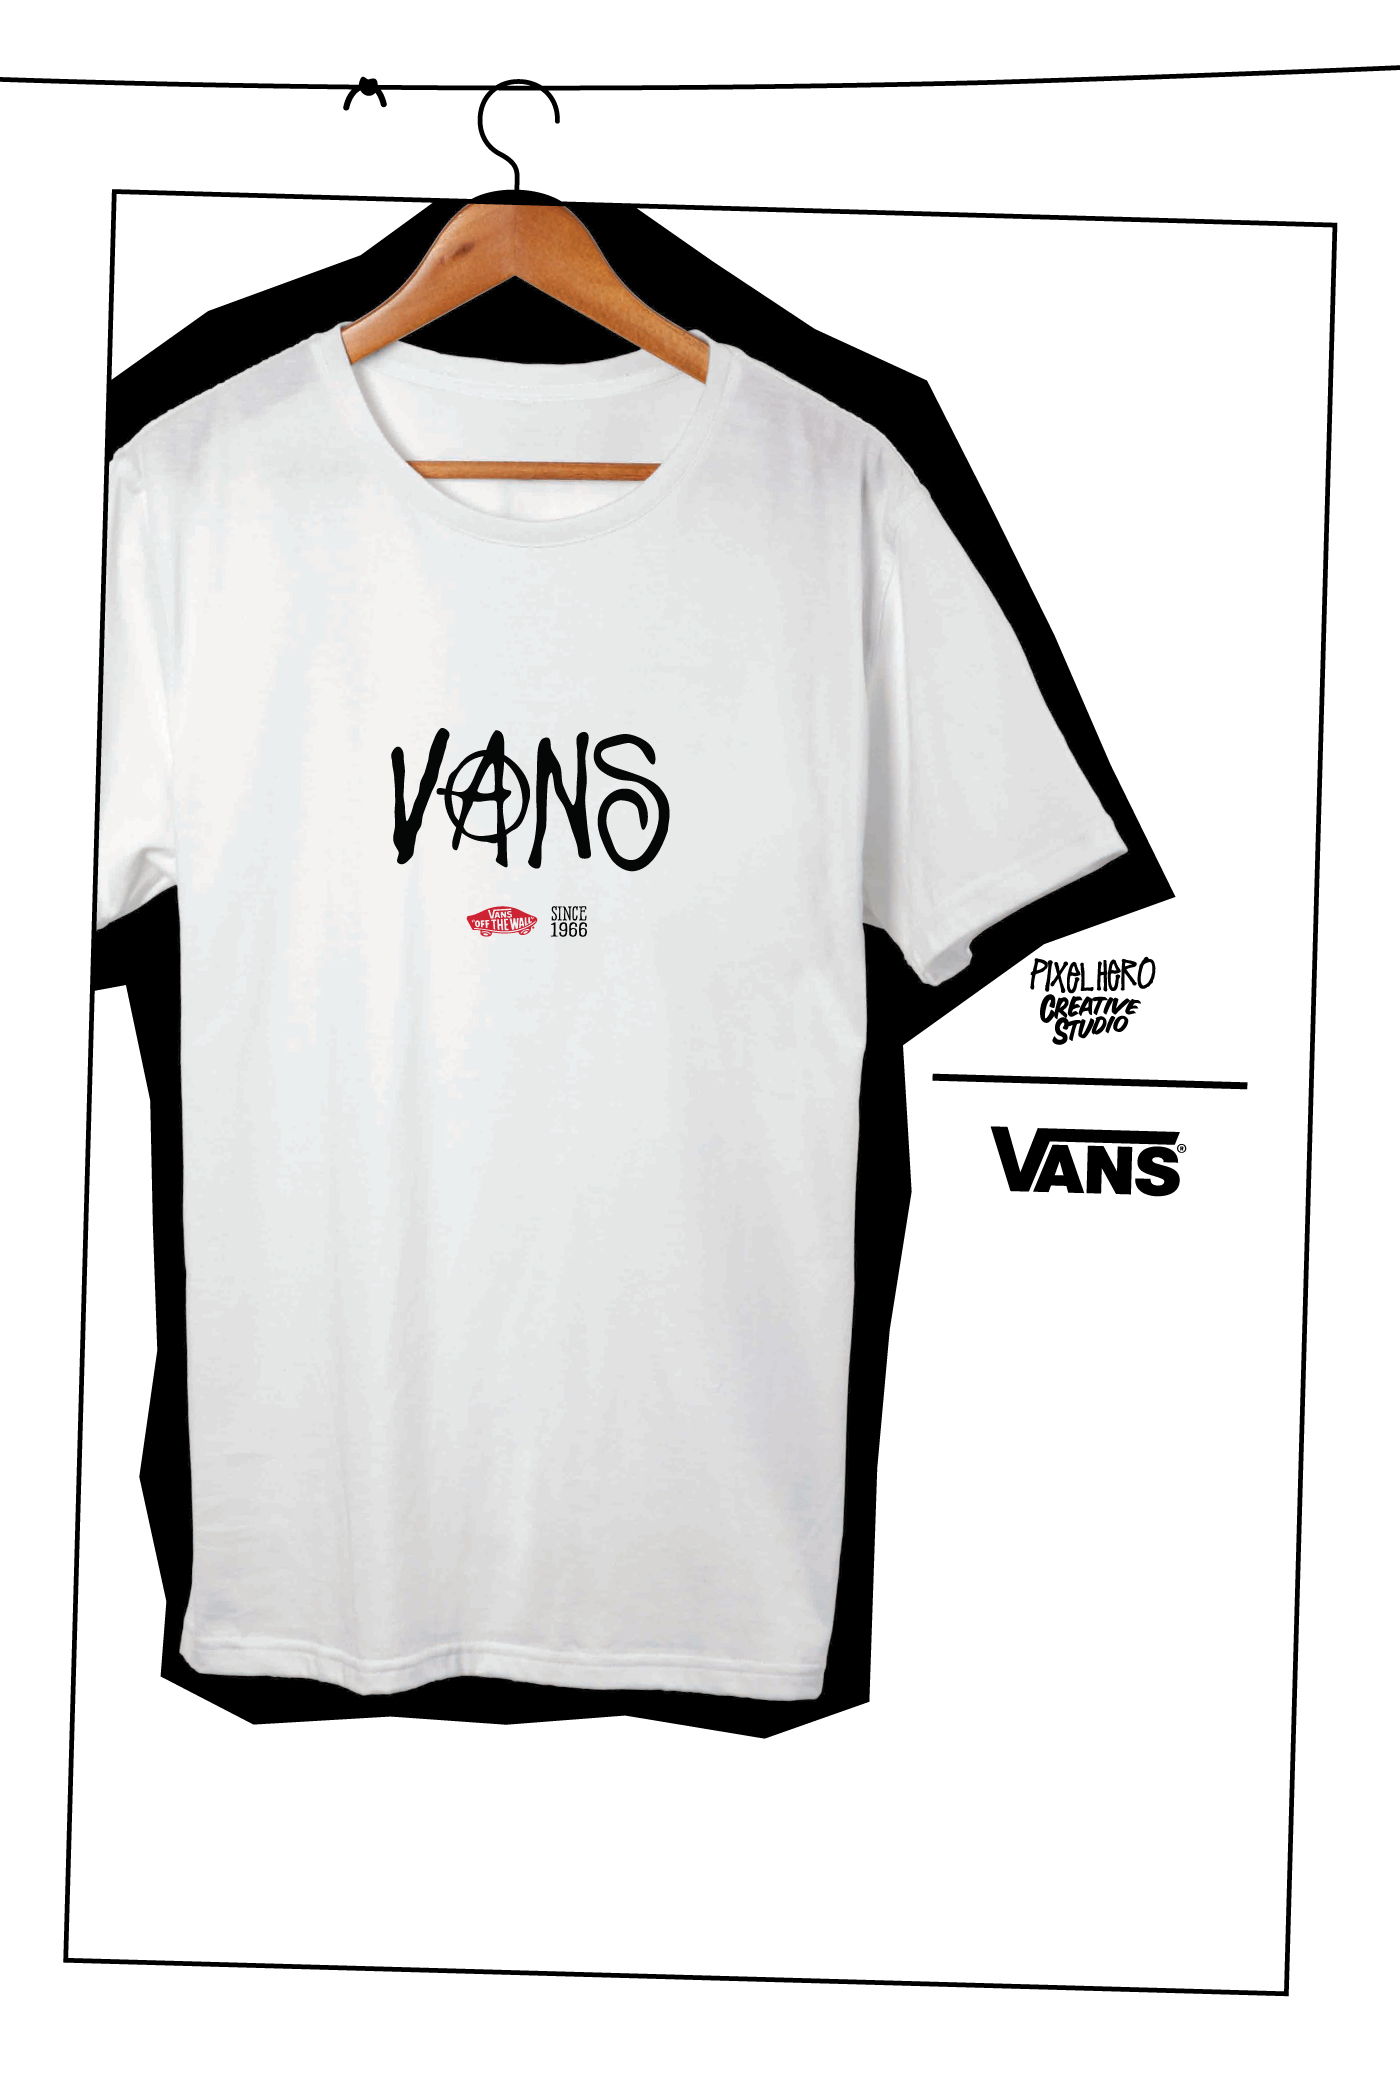 Vans Vasili Bryjak Pixel Hero off the wall shirt design ILLUSTRATION  skate